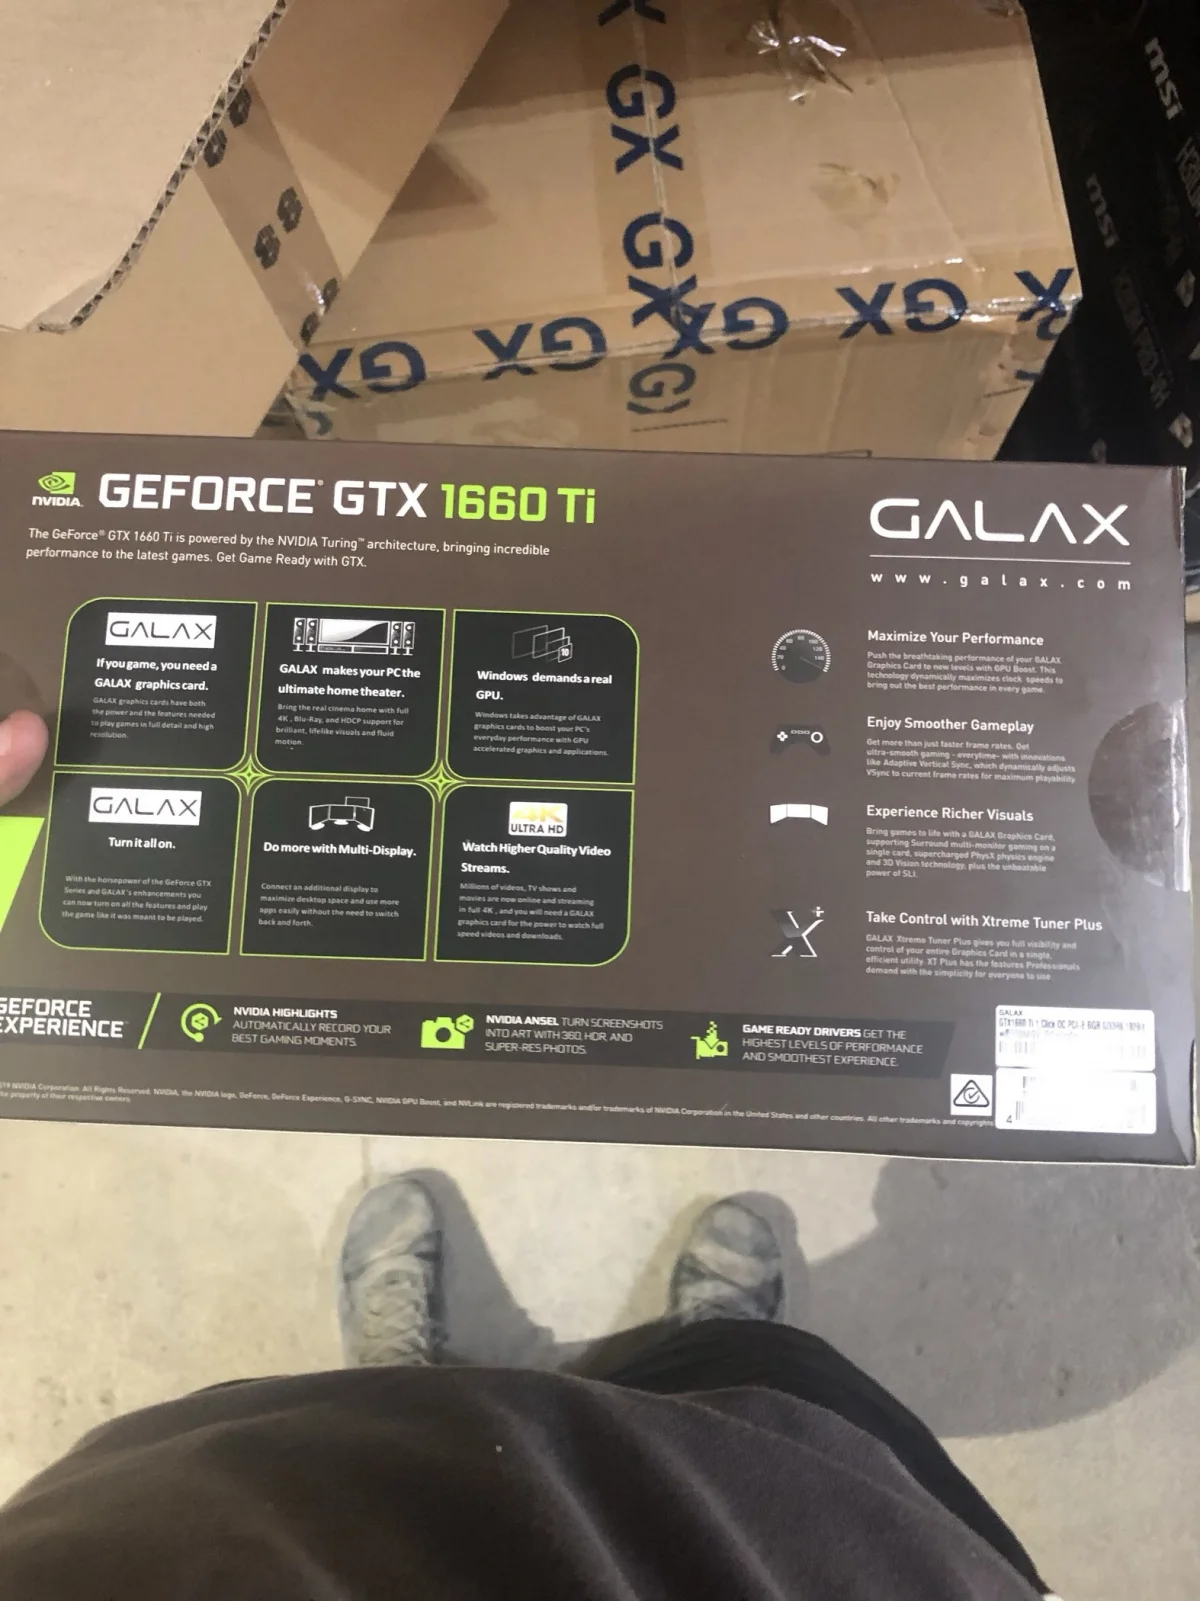 На Reddit появились фото упаковки GeForce GTX 1660 Ti в исполнении Galax - фото 3